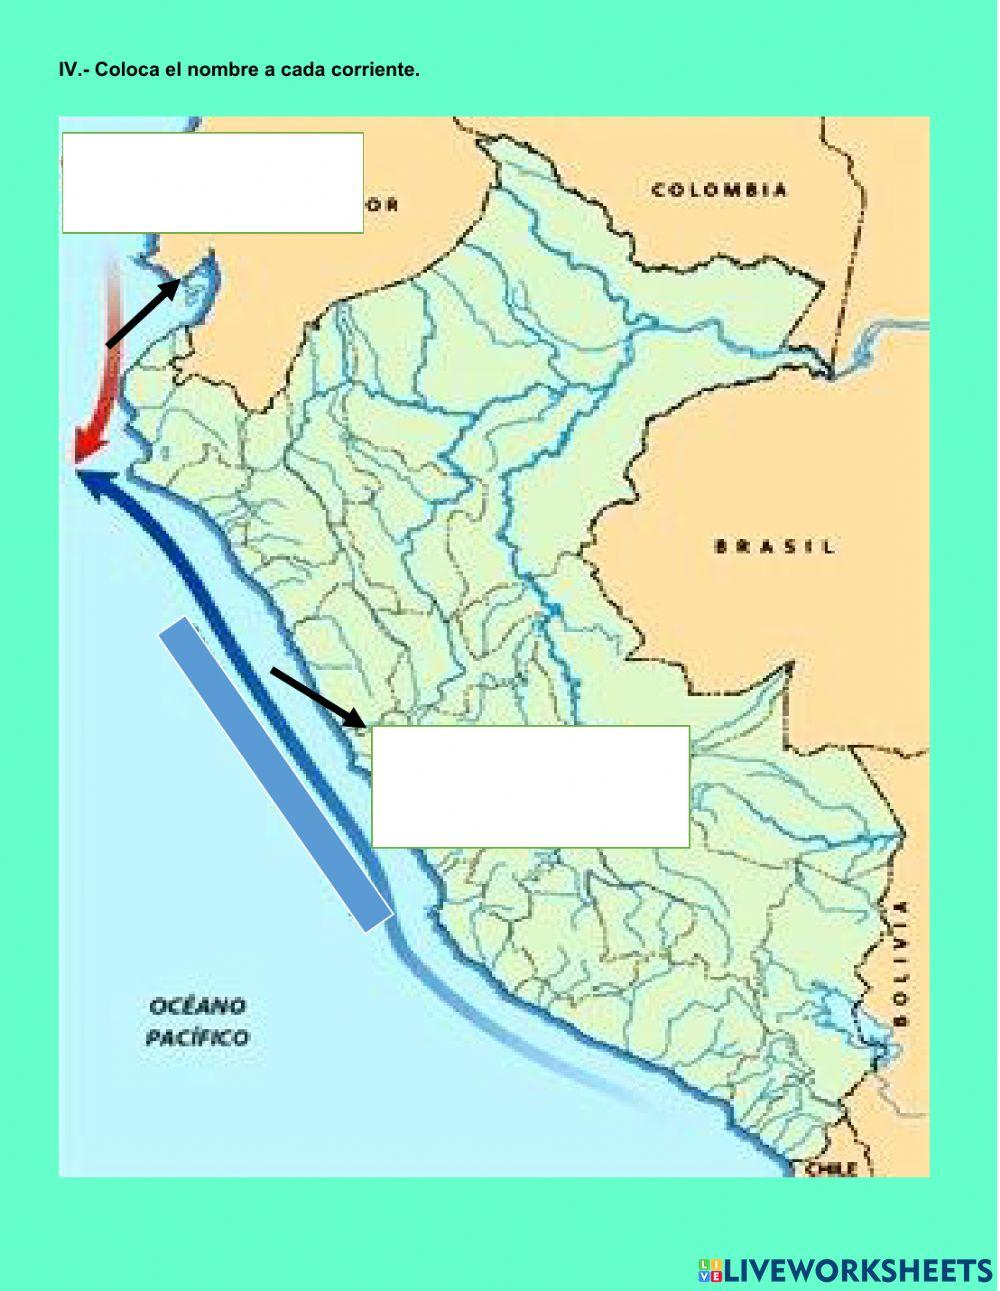 Mar peruano